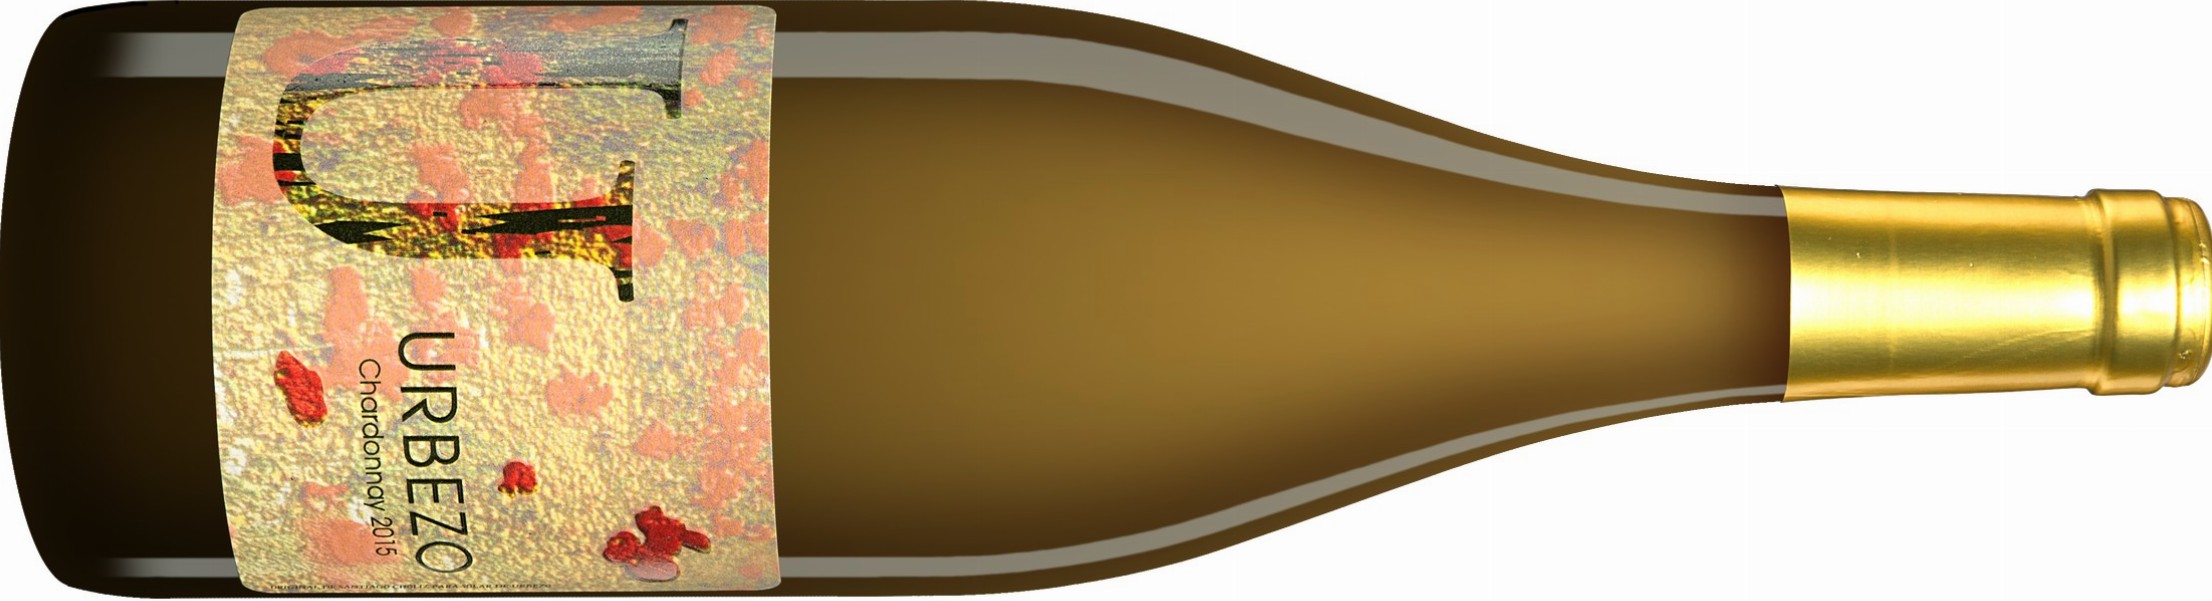 Urbezo Chardonnay Ecologico 2014